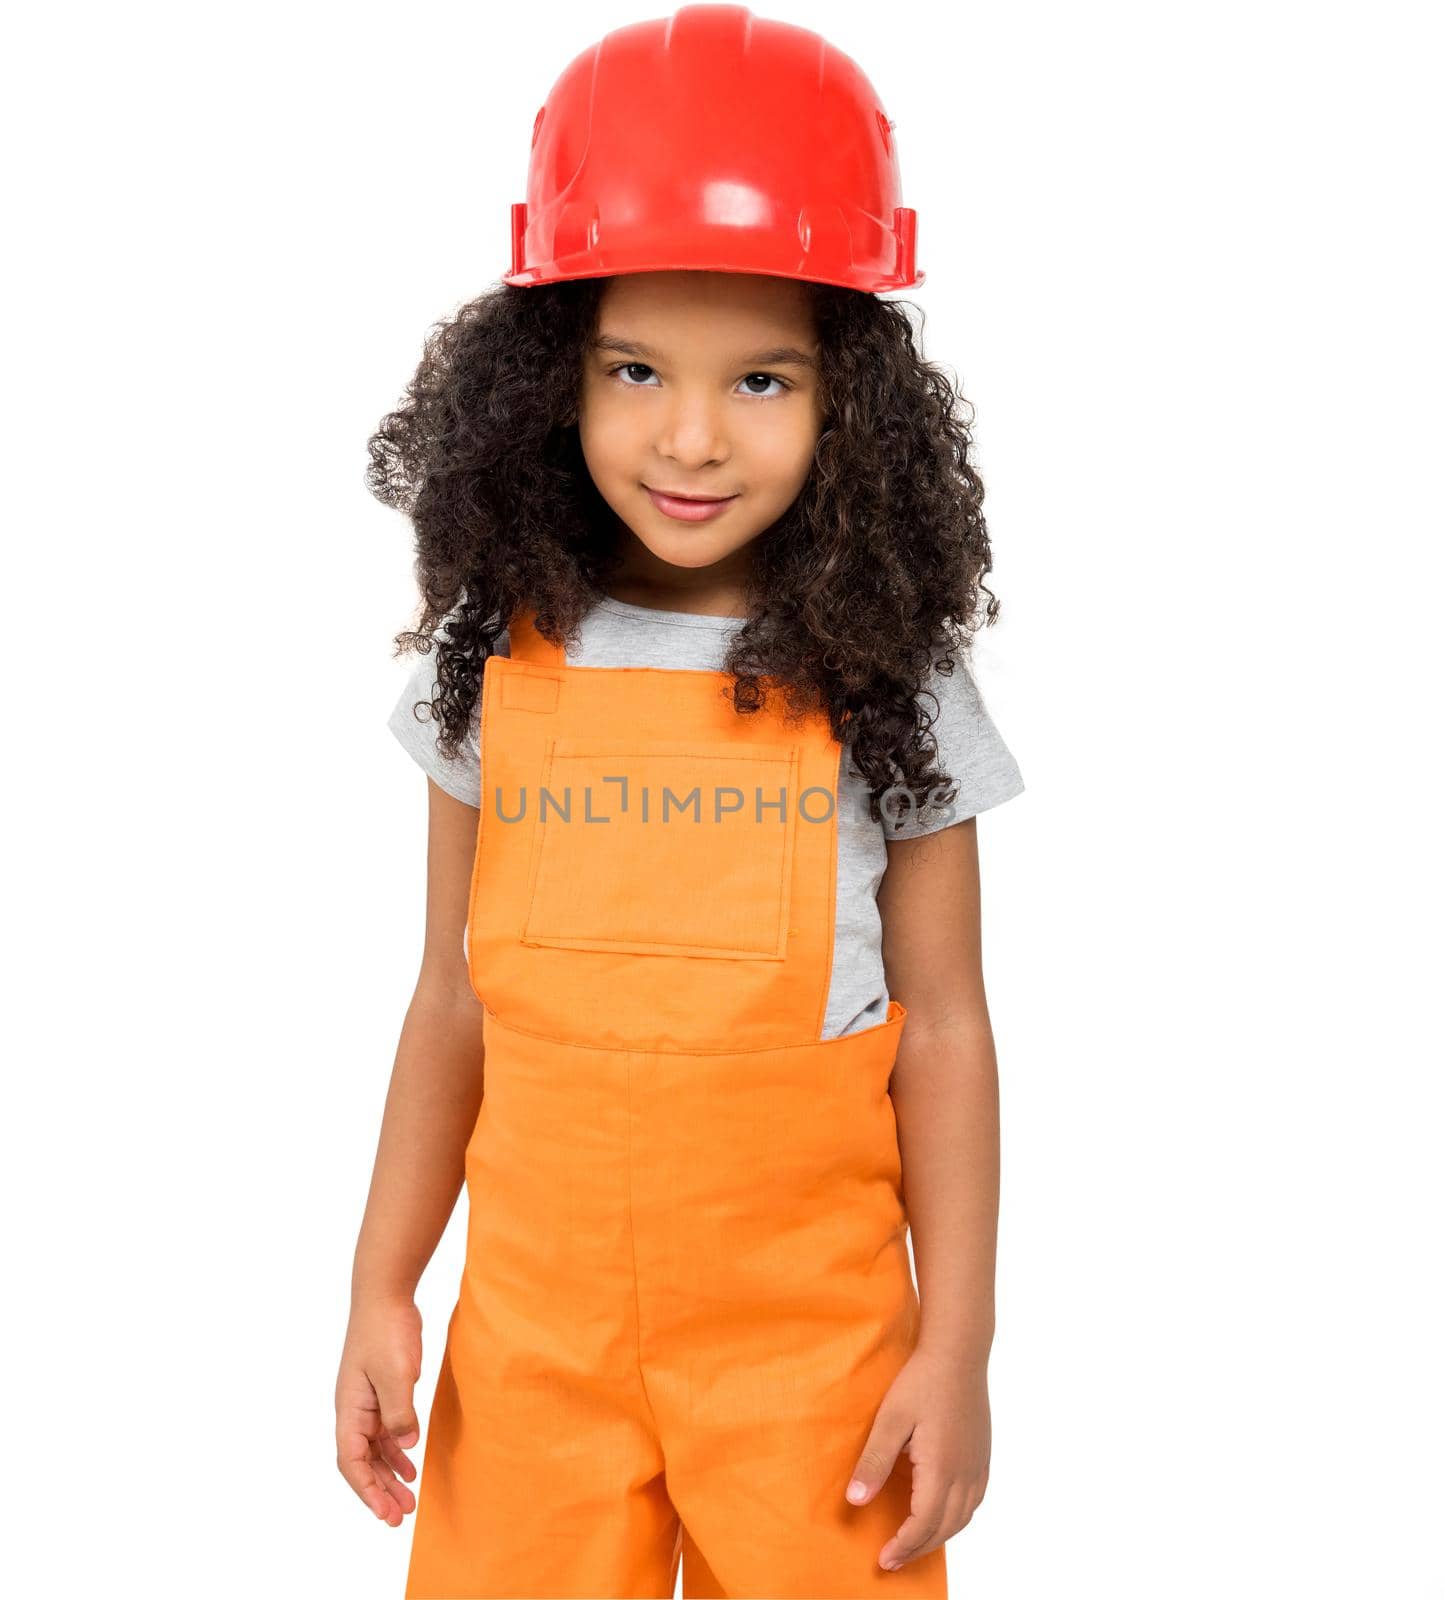 cute little girl in orange repairmen uniform and helmet isolatd on a white background